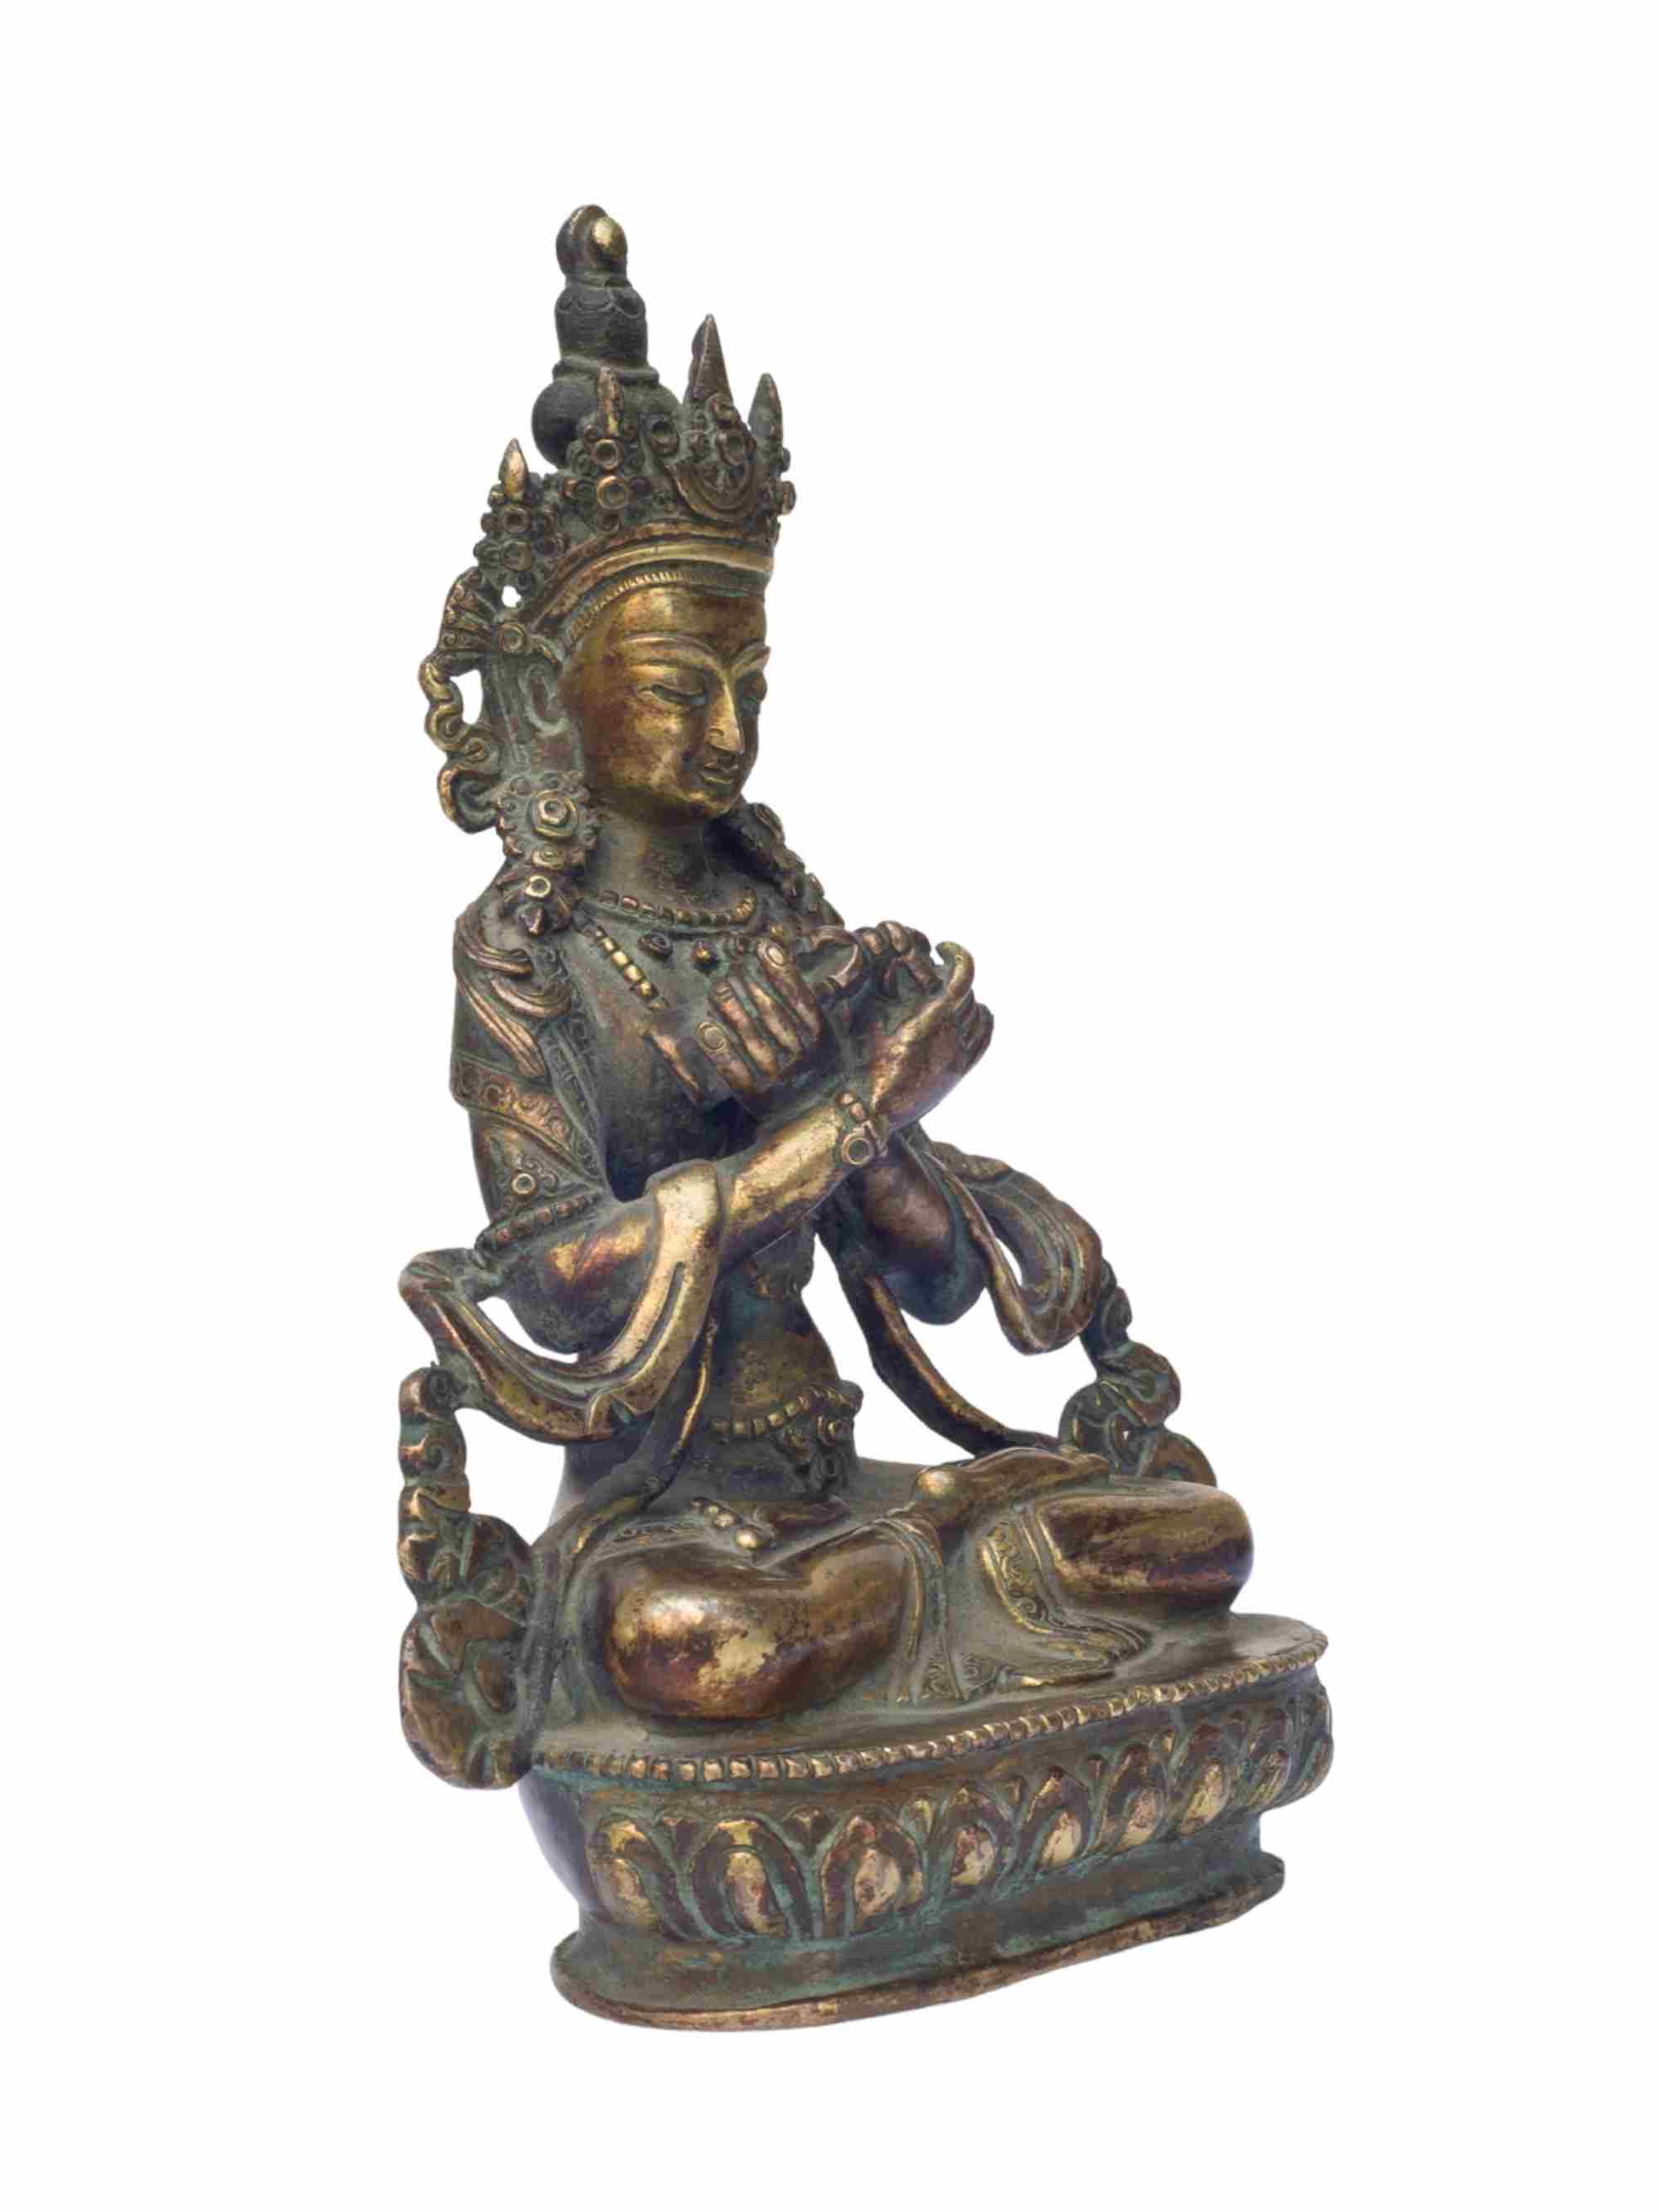 Buddhist Handmade Statue Of Vajradhara, gold Plated, Antique Finishing, High Quality